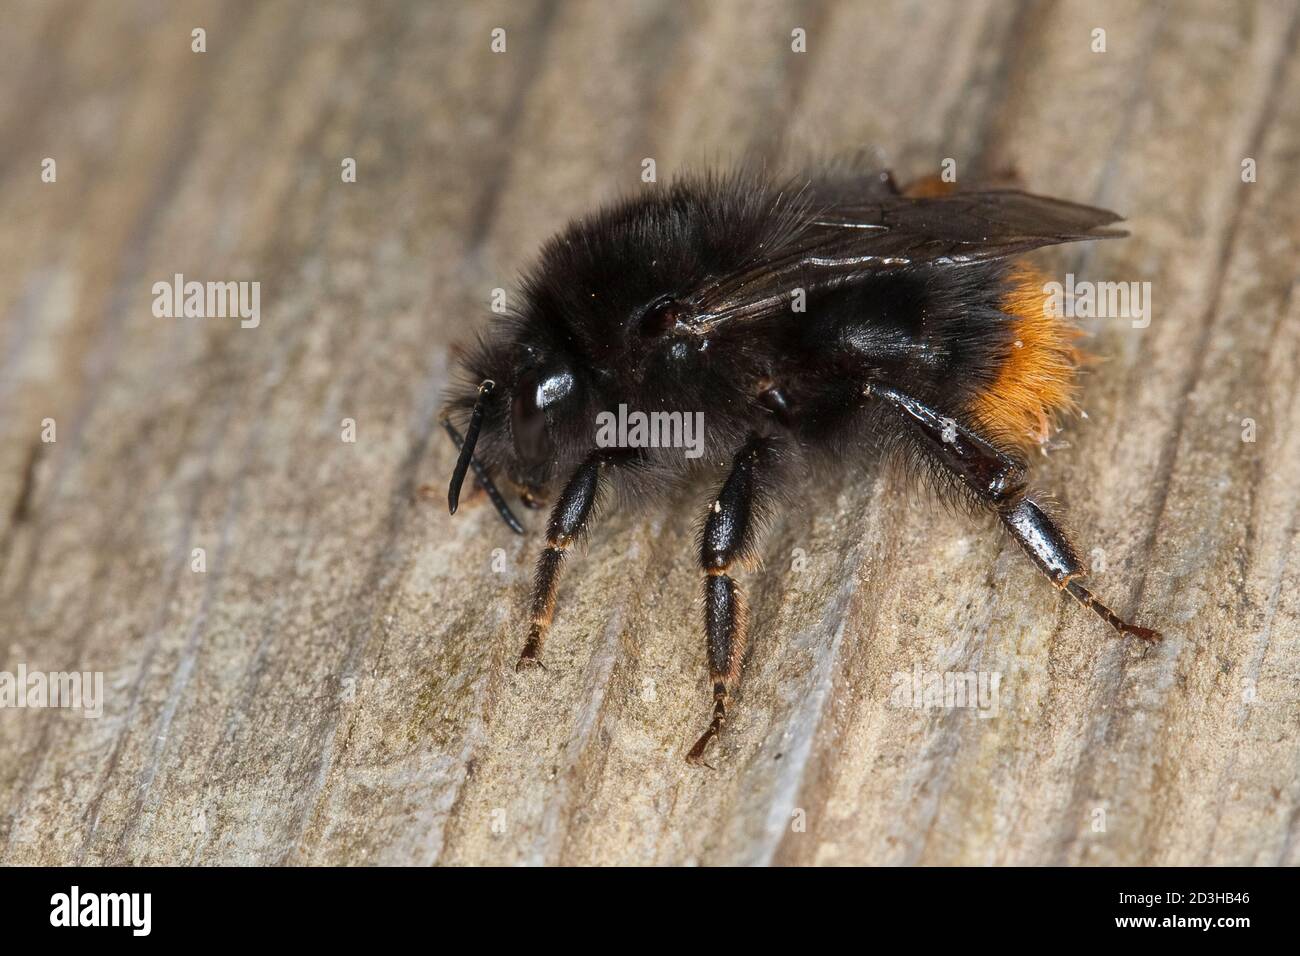 Distelhummel, Distel-Hummel, Weibchen, Bombus cf. soroeensis, Pyrobombus cf. soroeensis, broken-belted bumblebee, Ilfracombe bumblebee, female Stock Photo